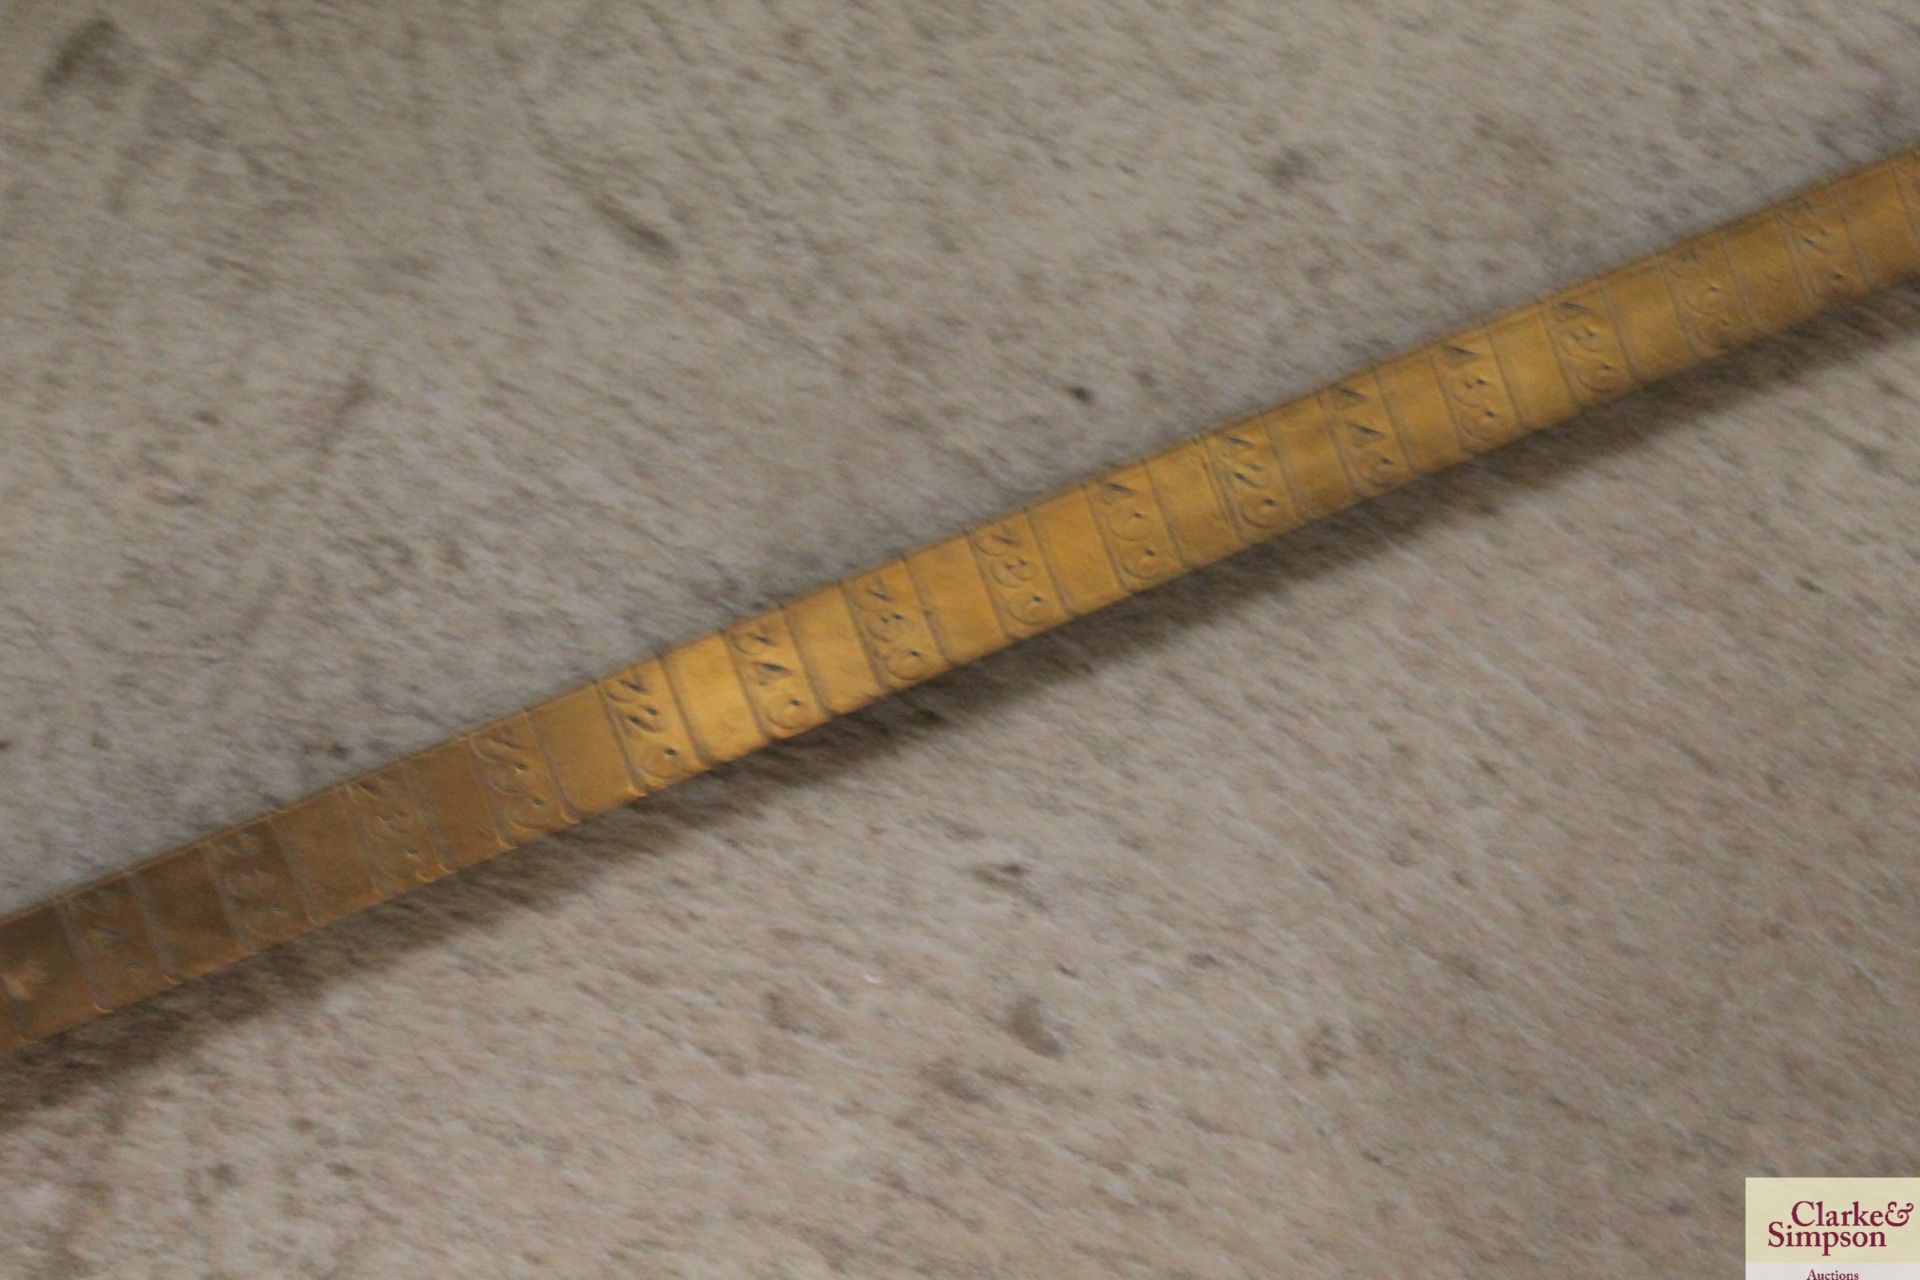 A brass tank fluid measuring stick - Image 8 of 11